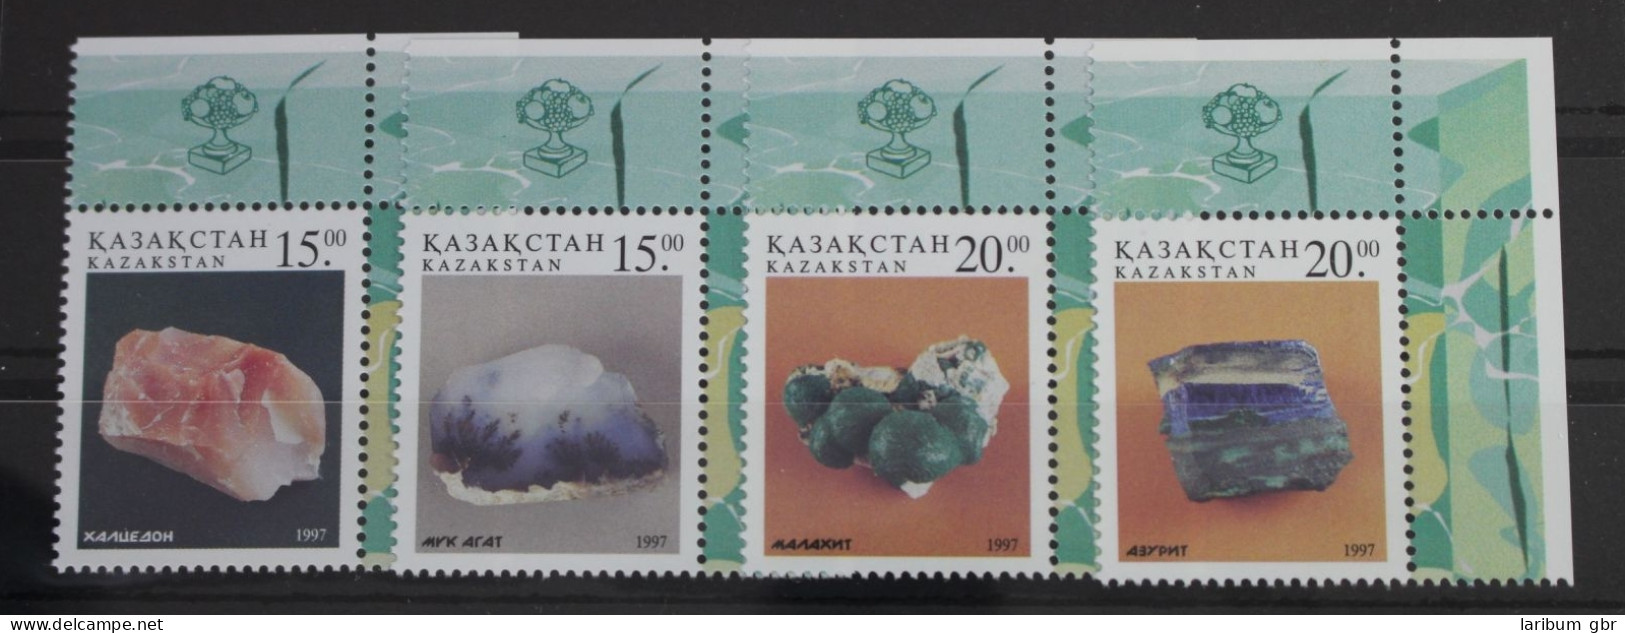 Kasachstan 188-191 Postfrisch #WT453 - Kazakhstan